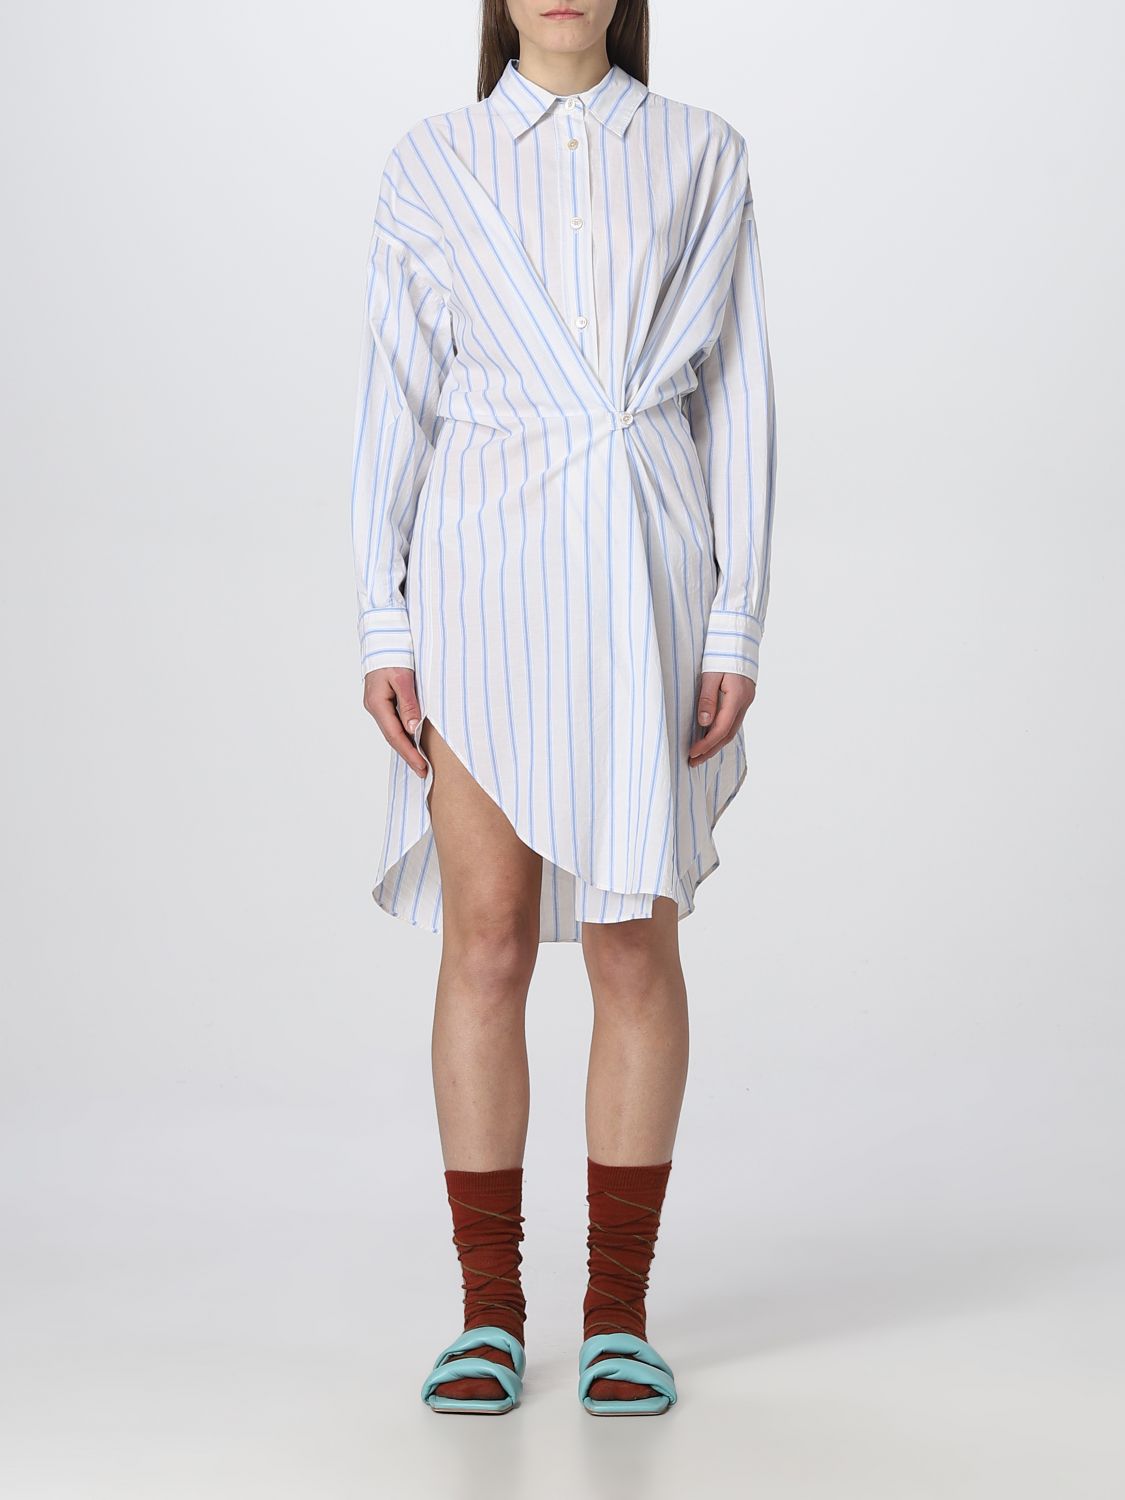 ISABEL MARANT ETOILE: for woman - Ecru | Isabel Marant Etoile dress RO0006FAA1I40E online on GIGLIO.COM